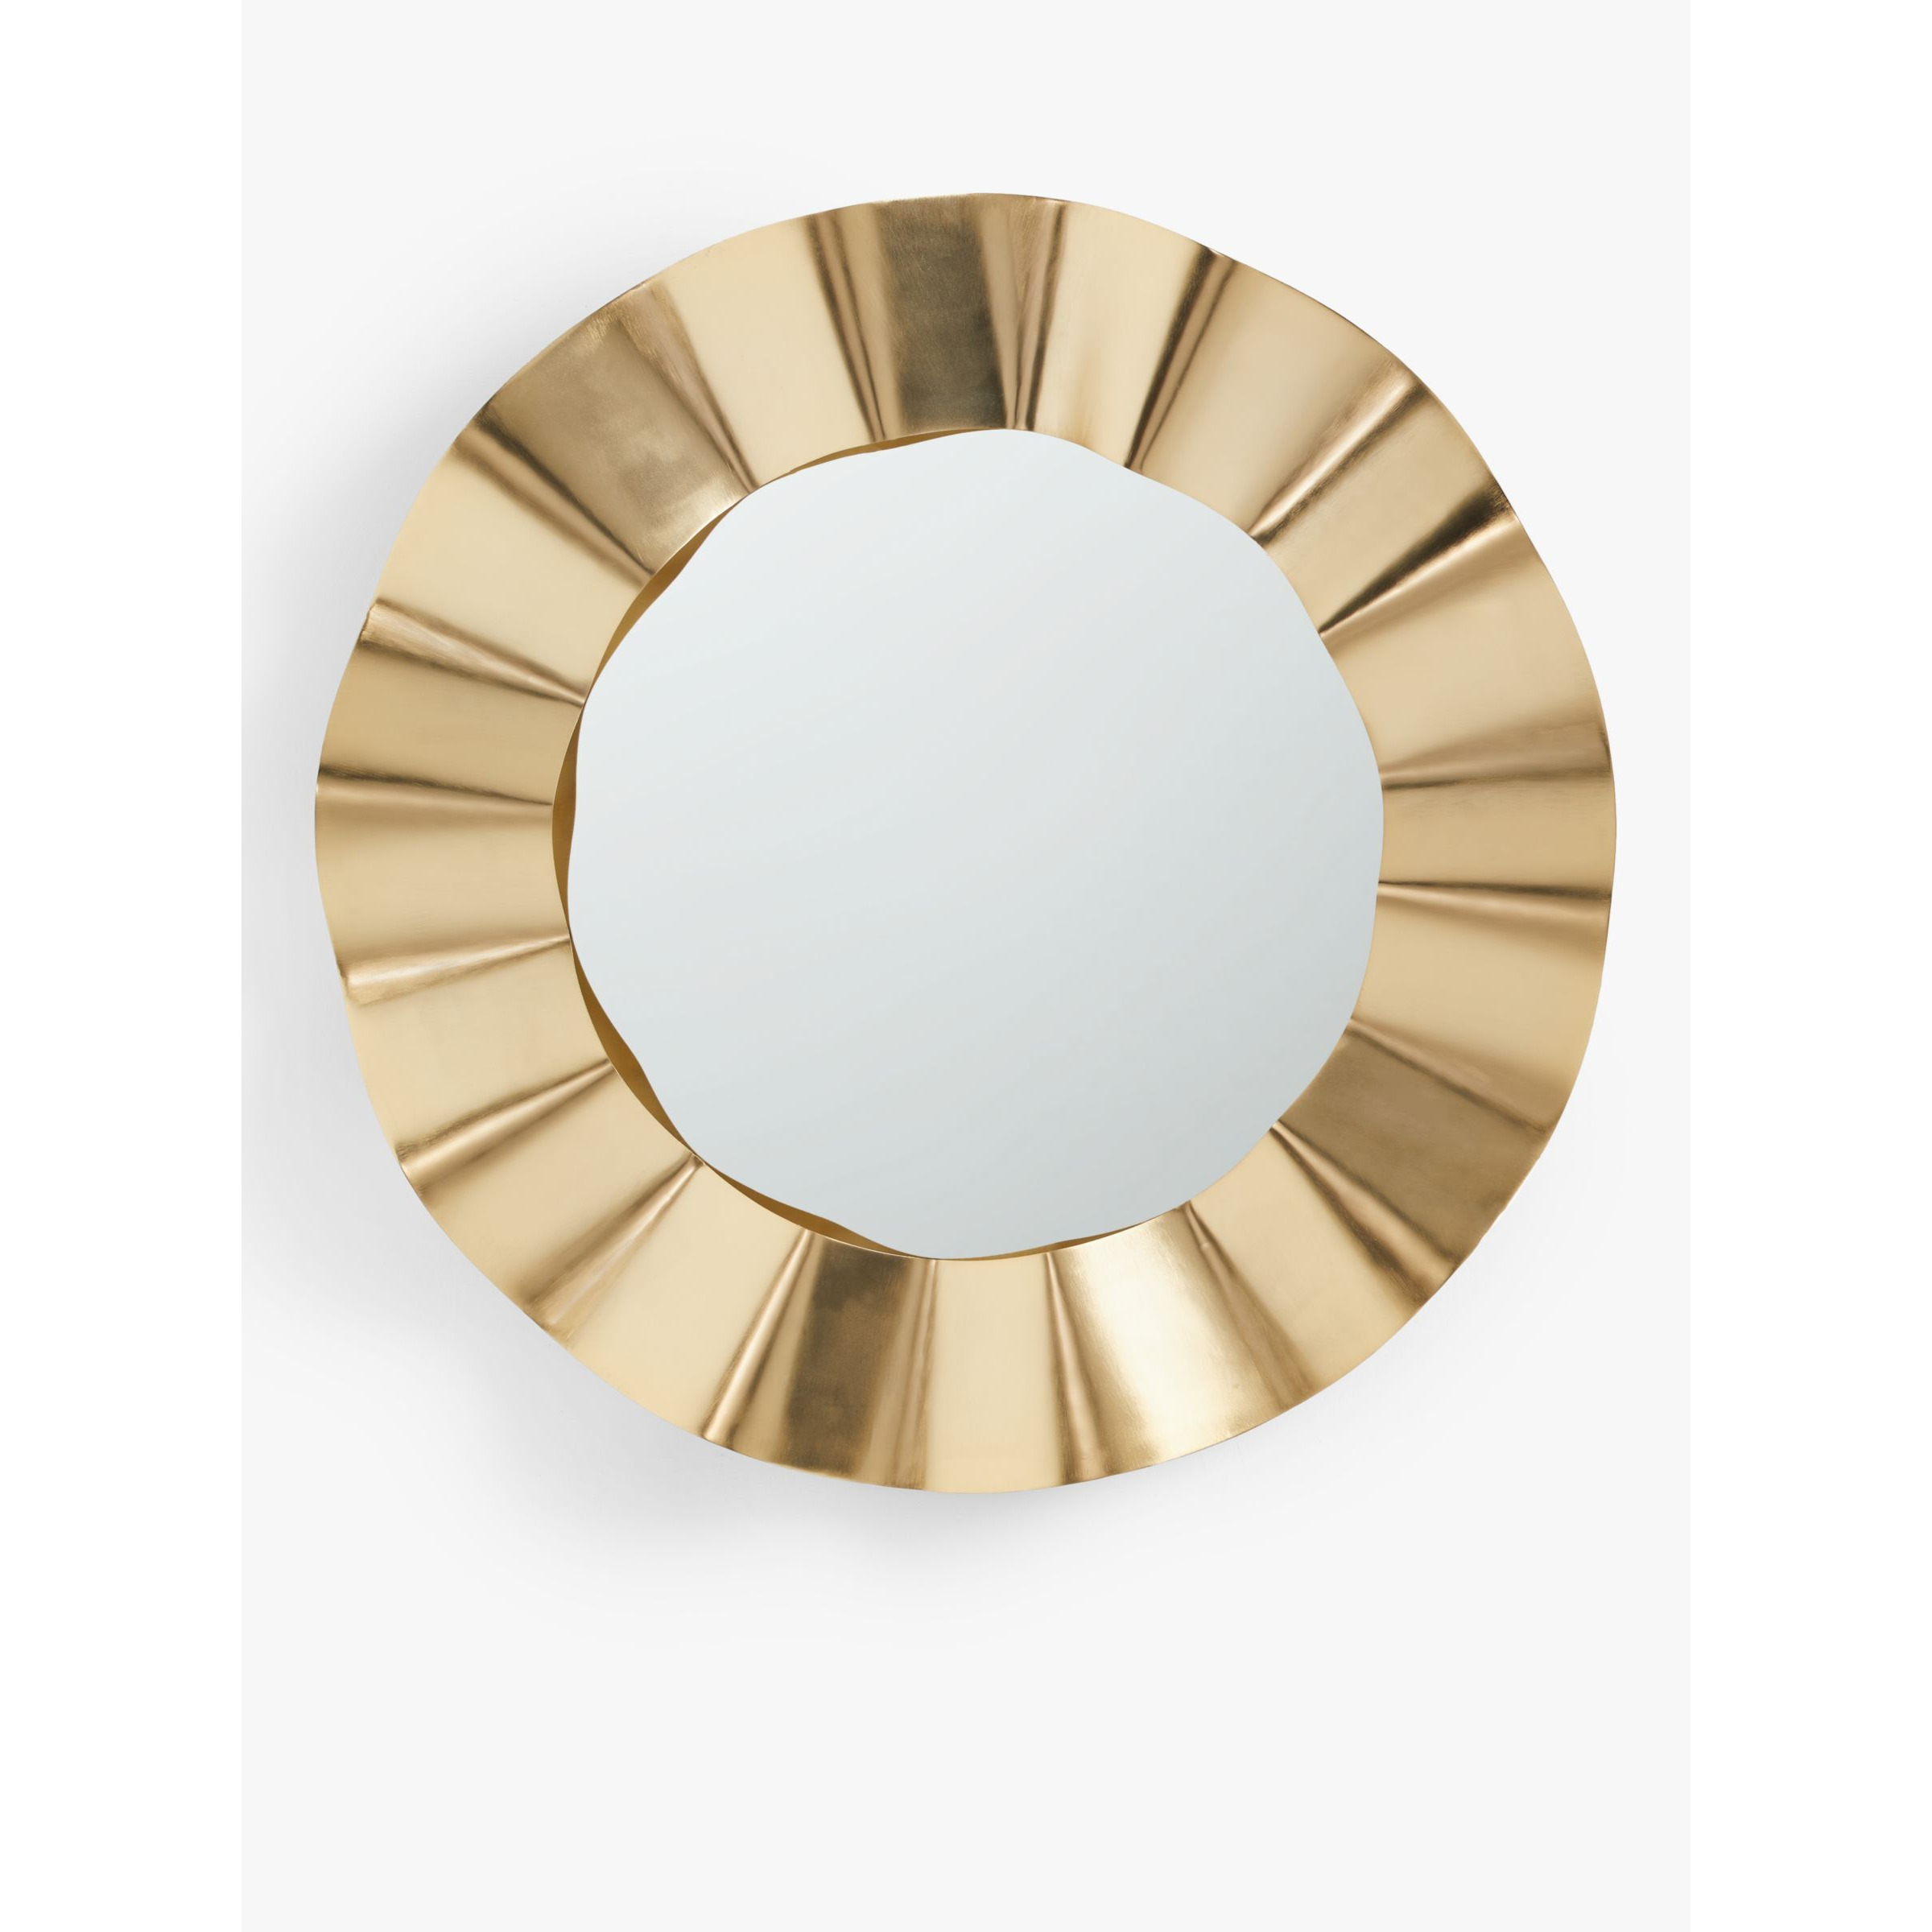 John Lewis Fluted Round Metal Wall Mirror, 78.5cm, Gold - image 1